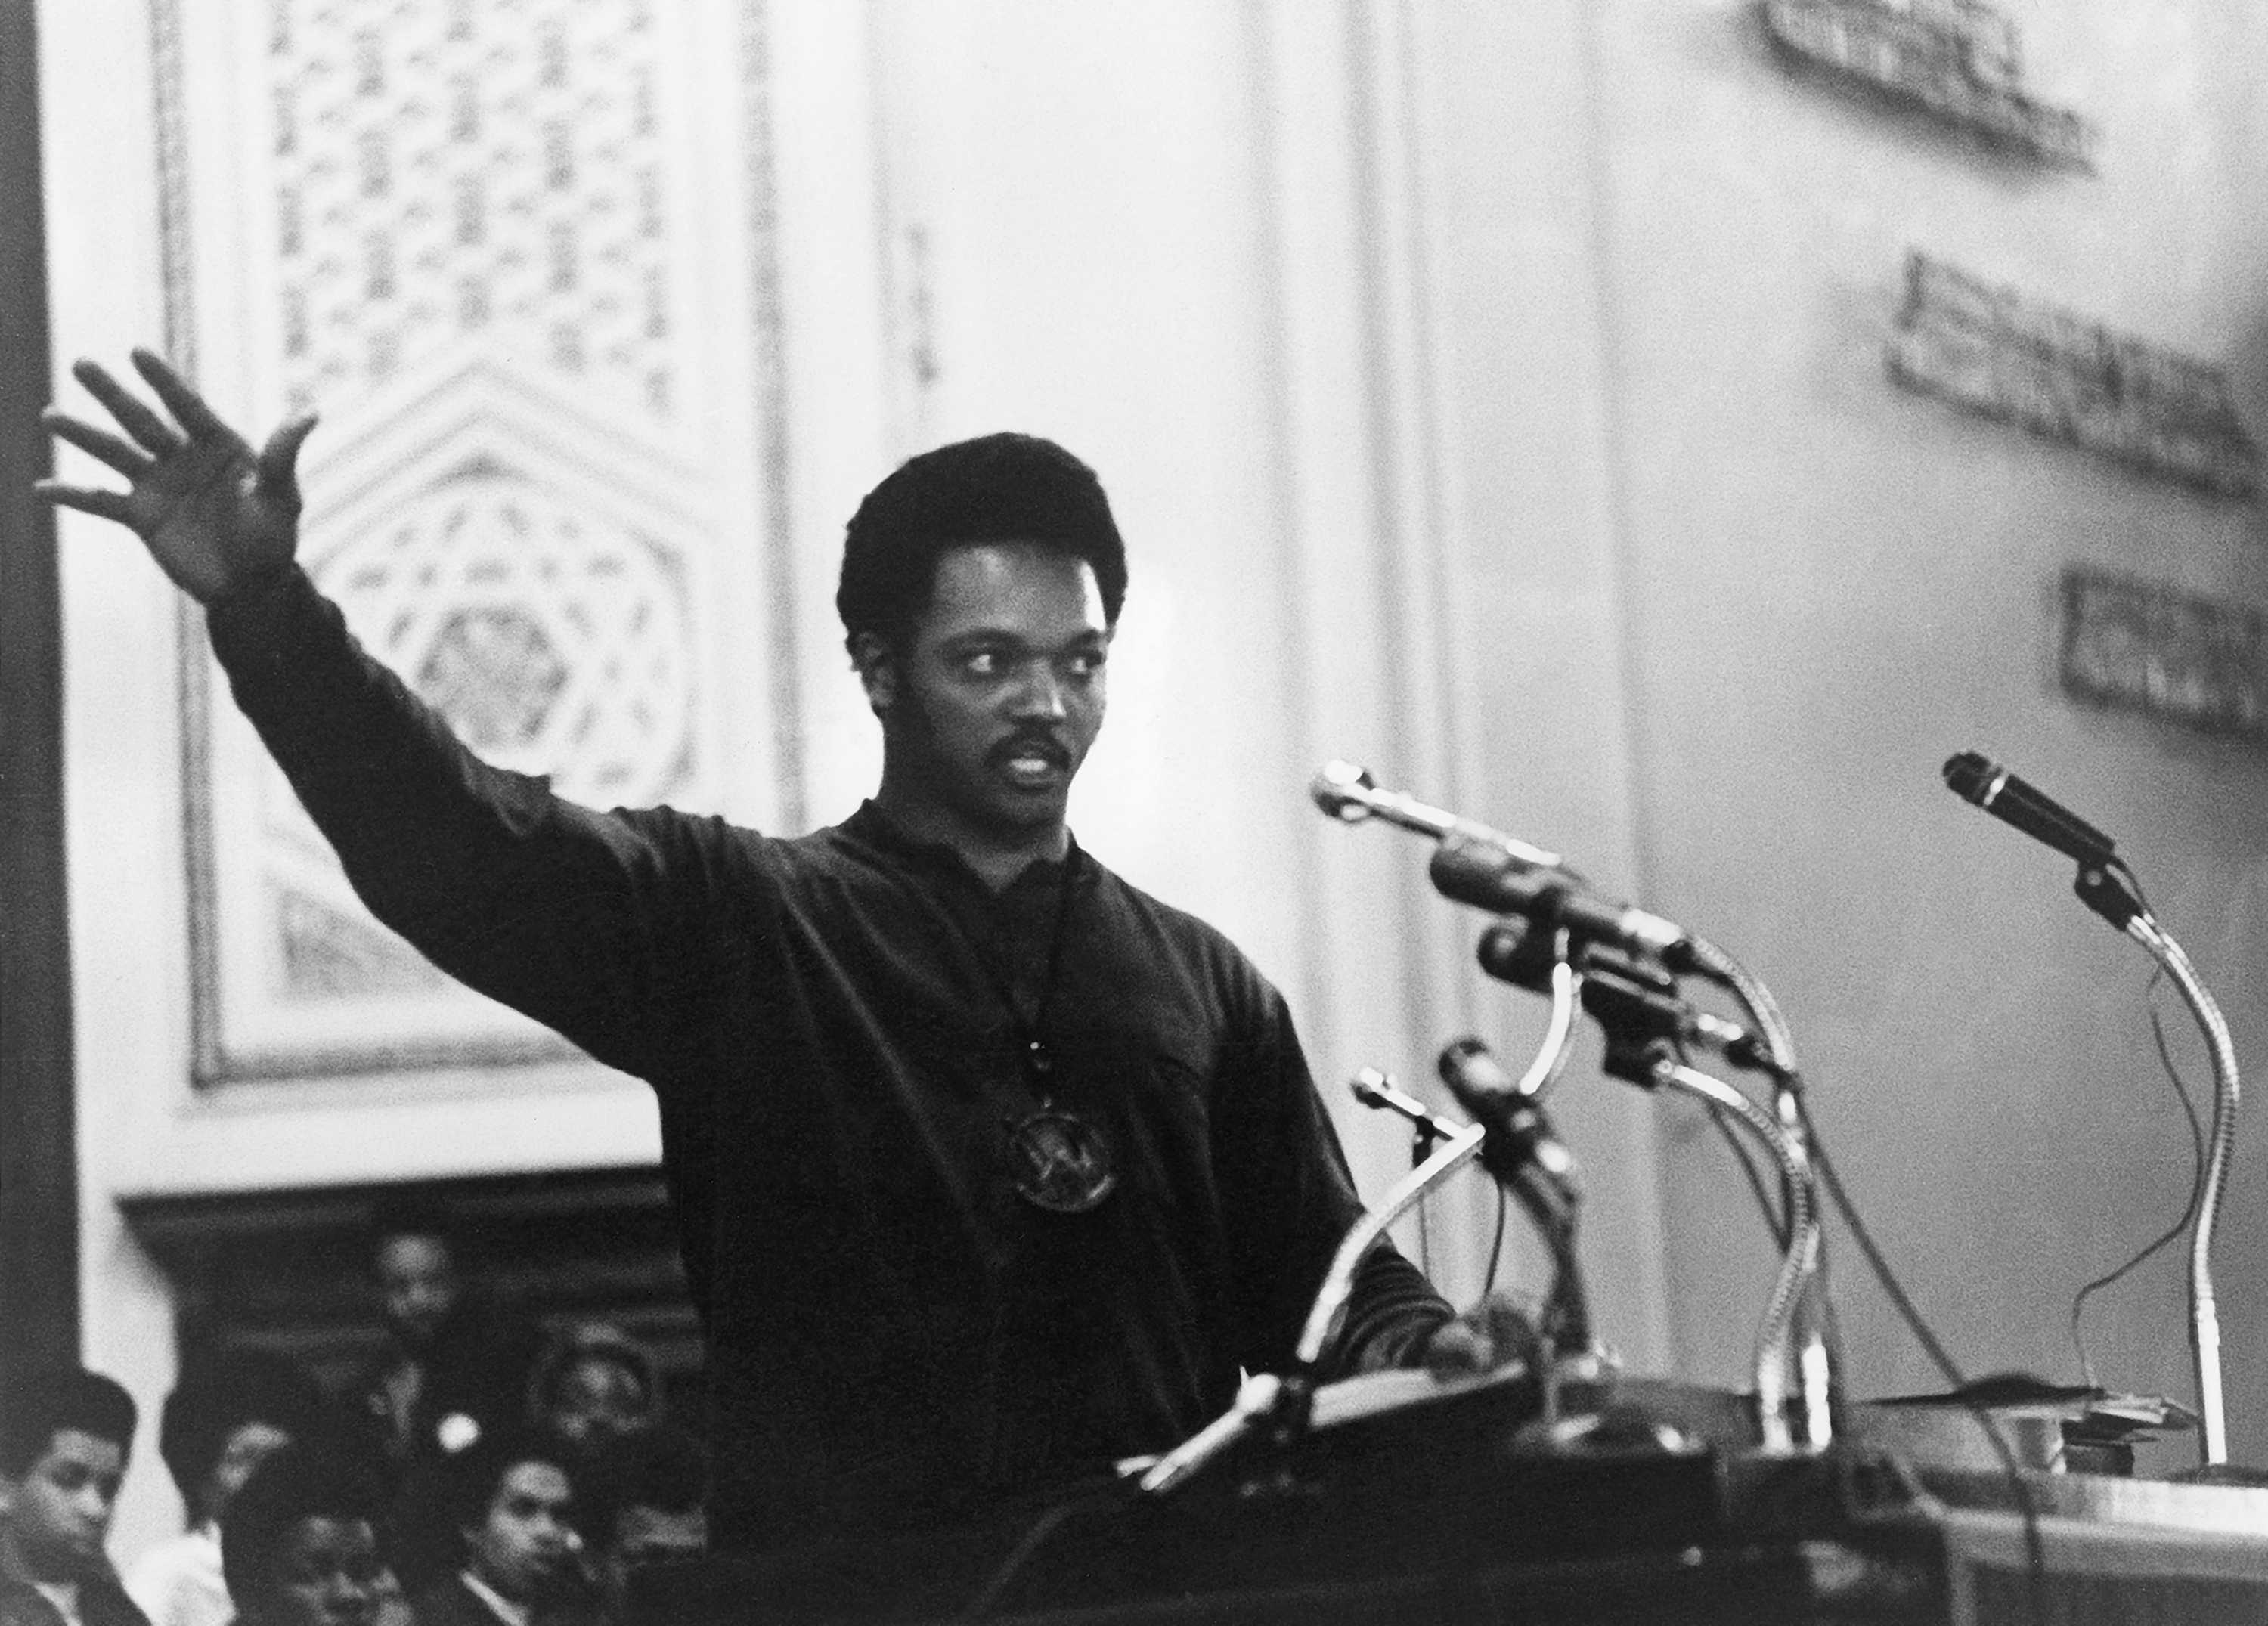 Photograph of Rev. Jesse Jackson speaking at a podium